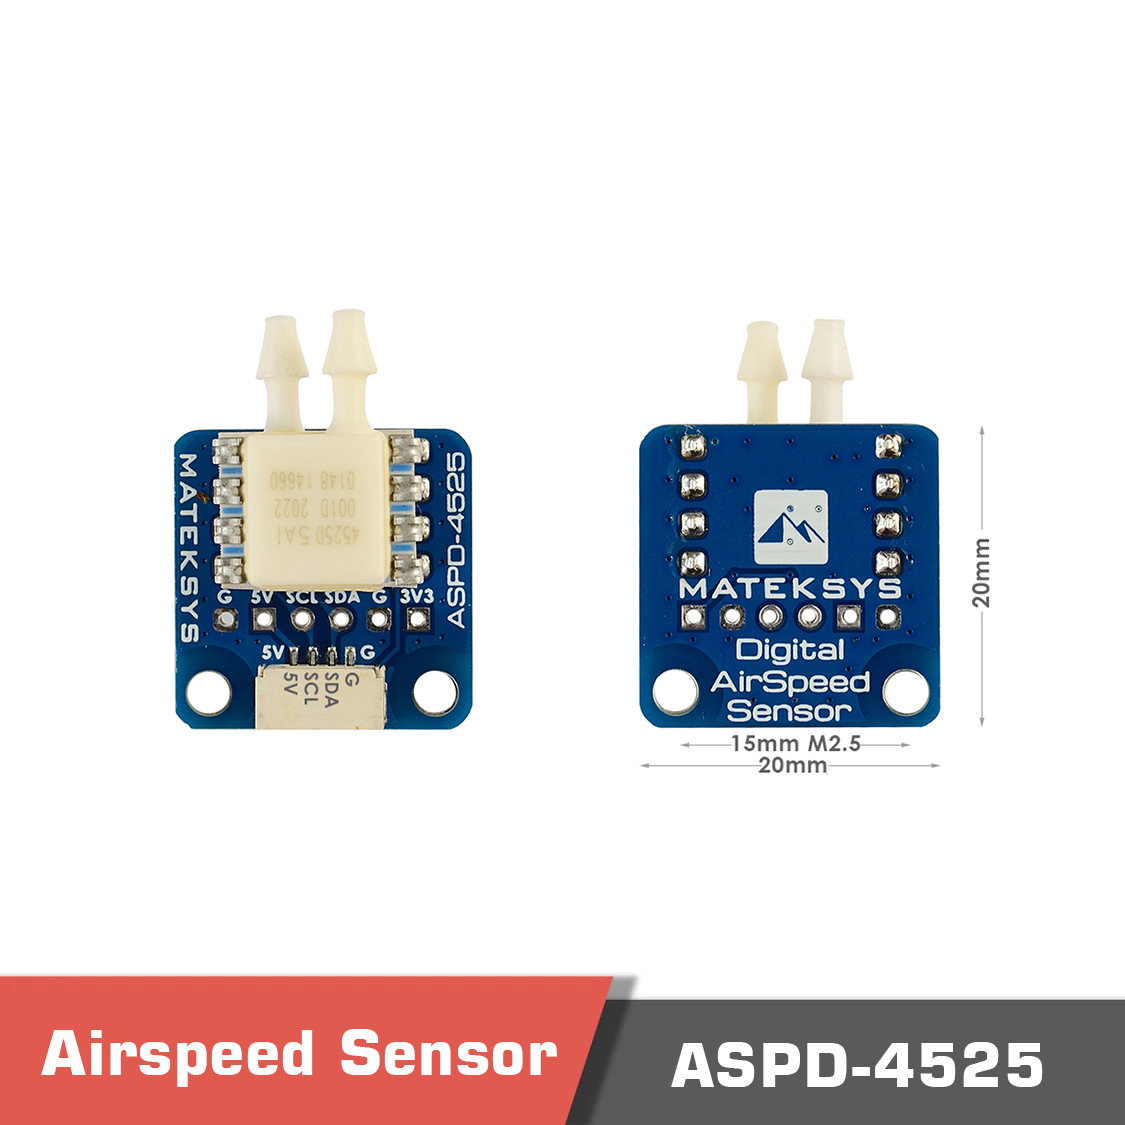 Aspd 4225 1 - matek aspd-dlvr,aspd-dlvr digital airspeed sensor,digital airspeed sensor,airspeed,pitot tube,airspeed sensor,holybro,matek systems - motionew - 2